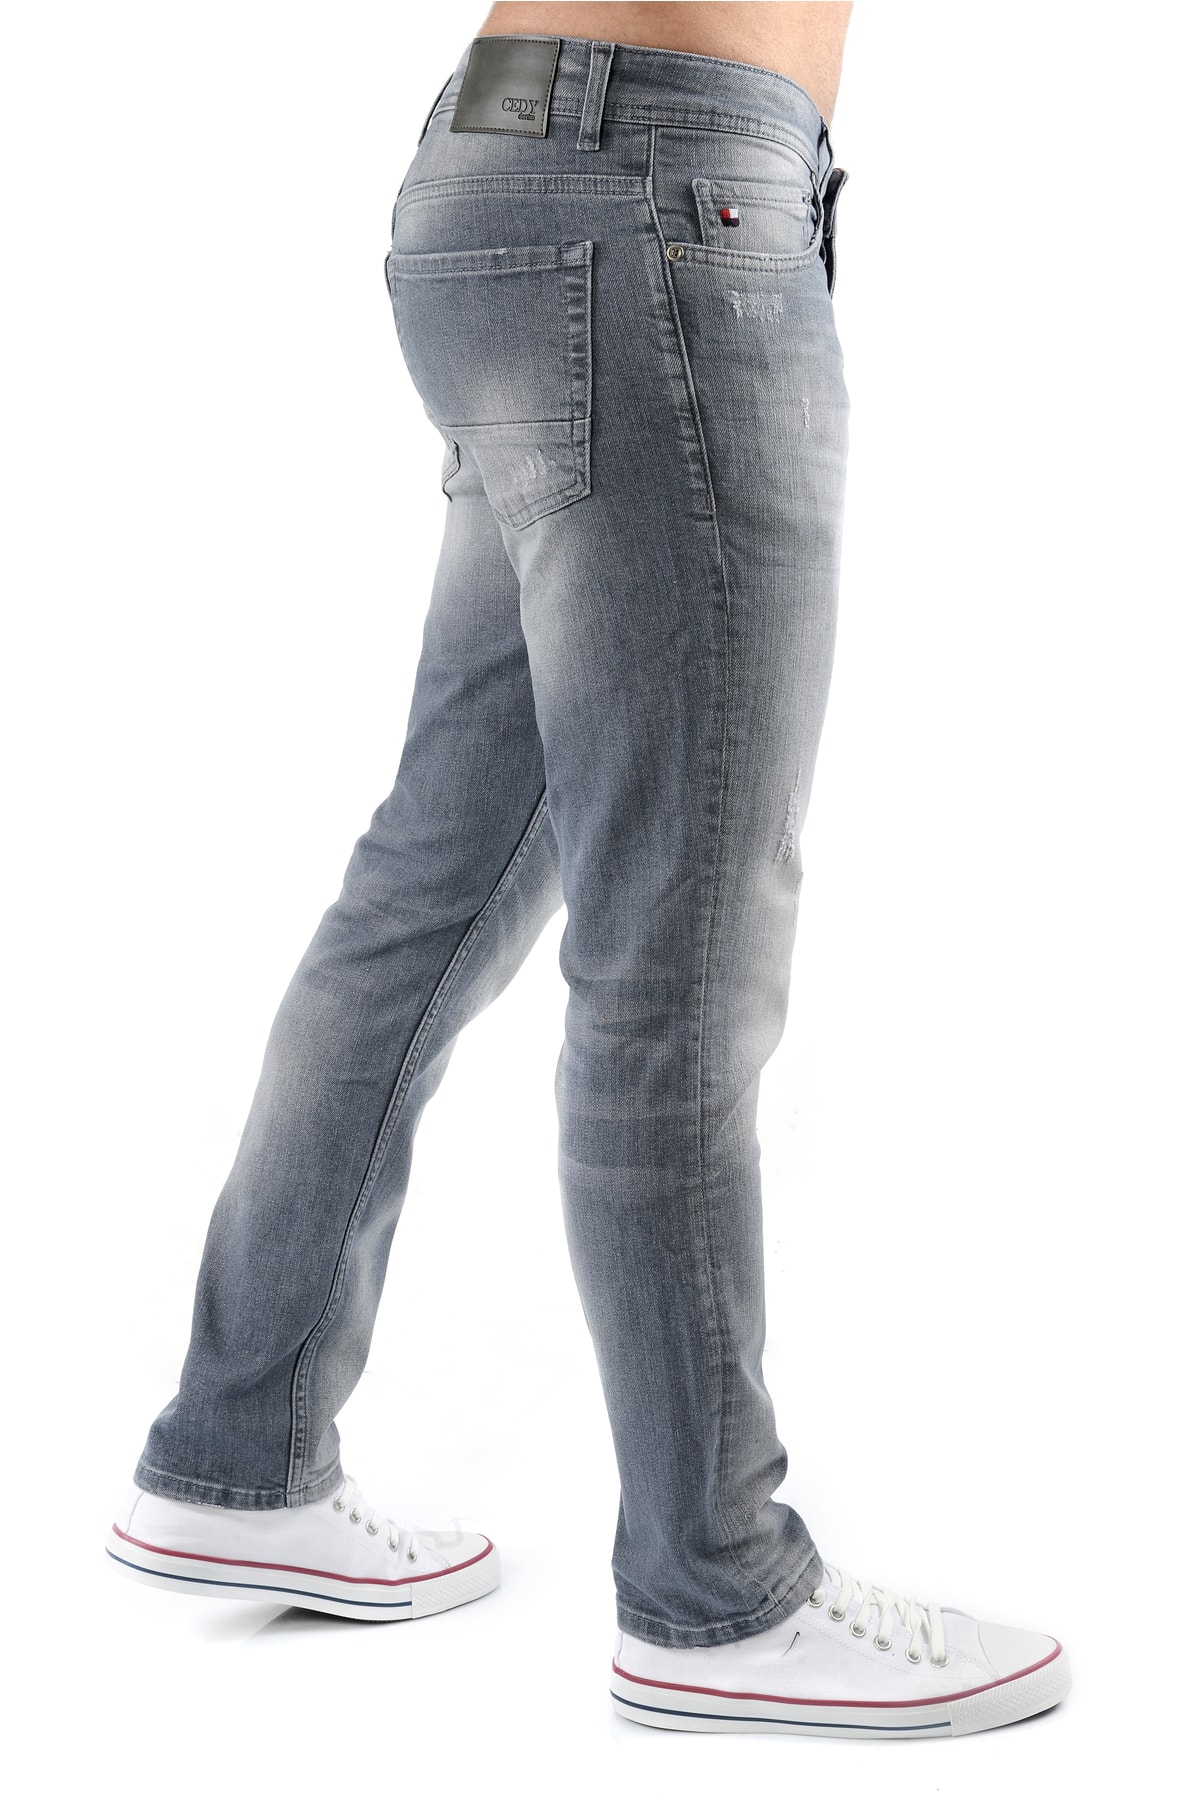 CEDY DENIM Erkek Koyu Füme Kot Pantolon Slim Fit Jean - C329